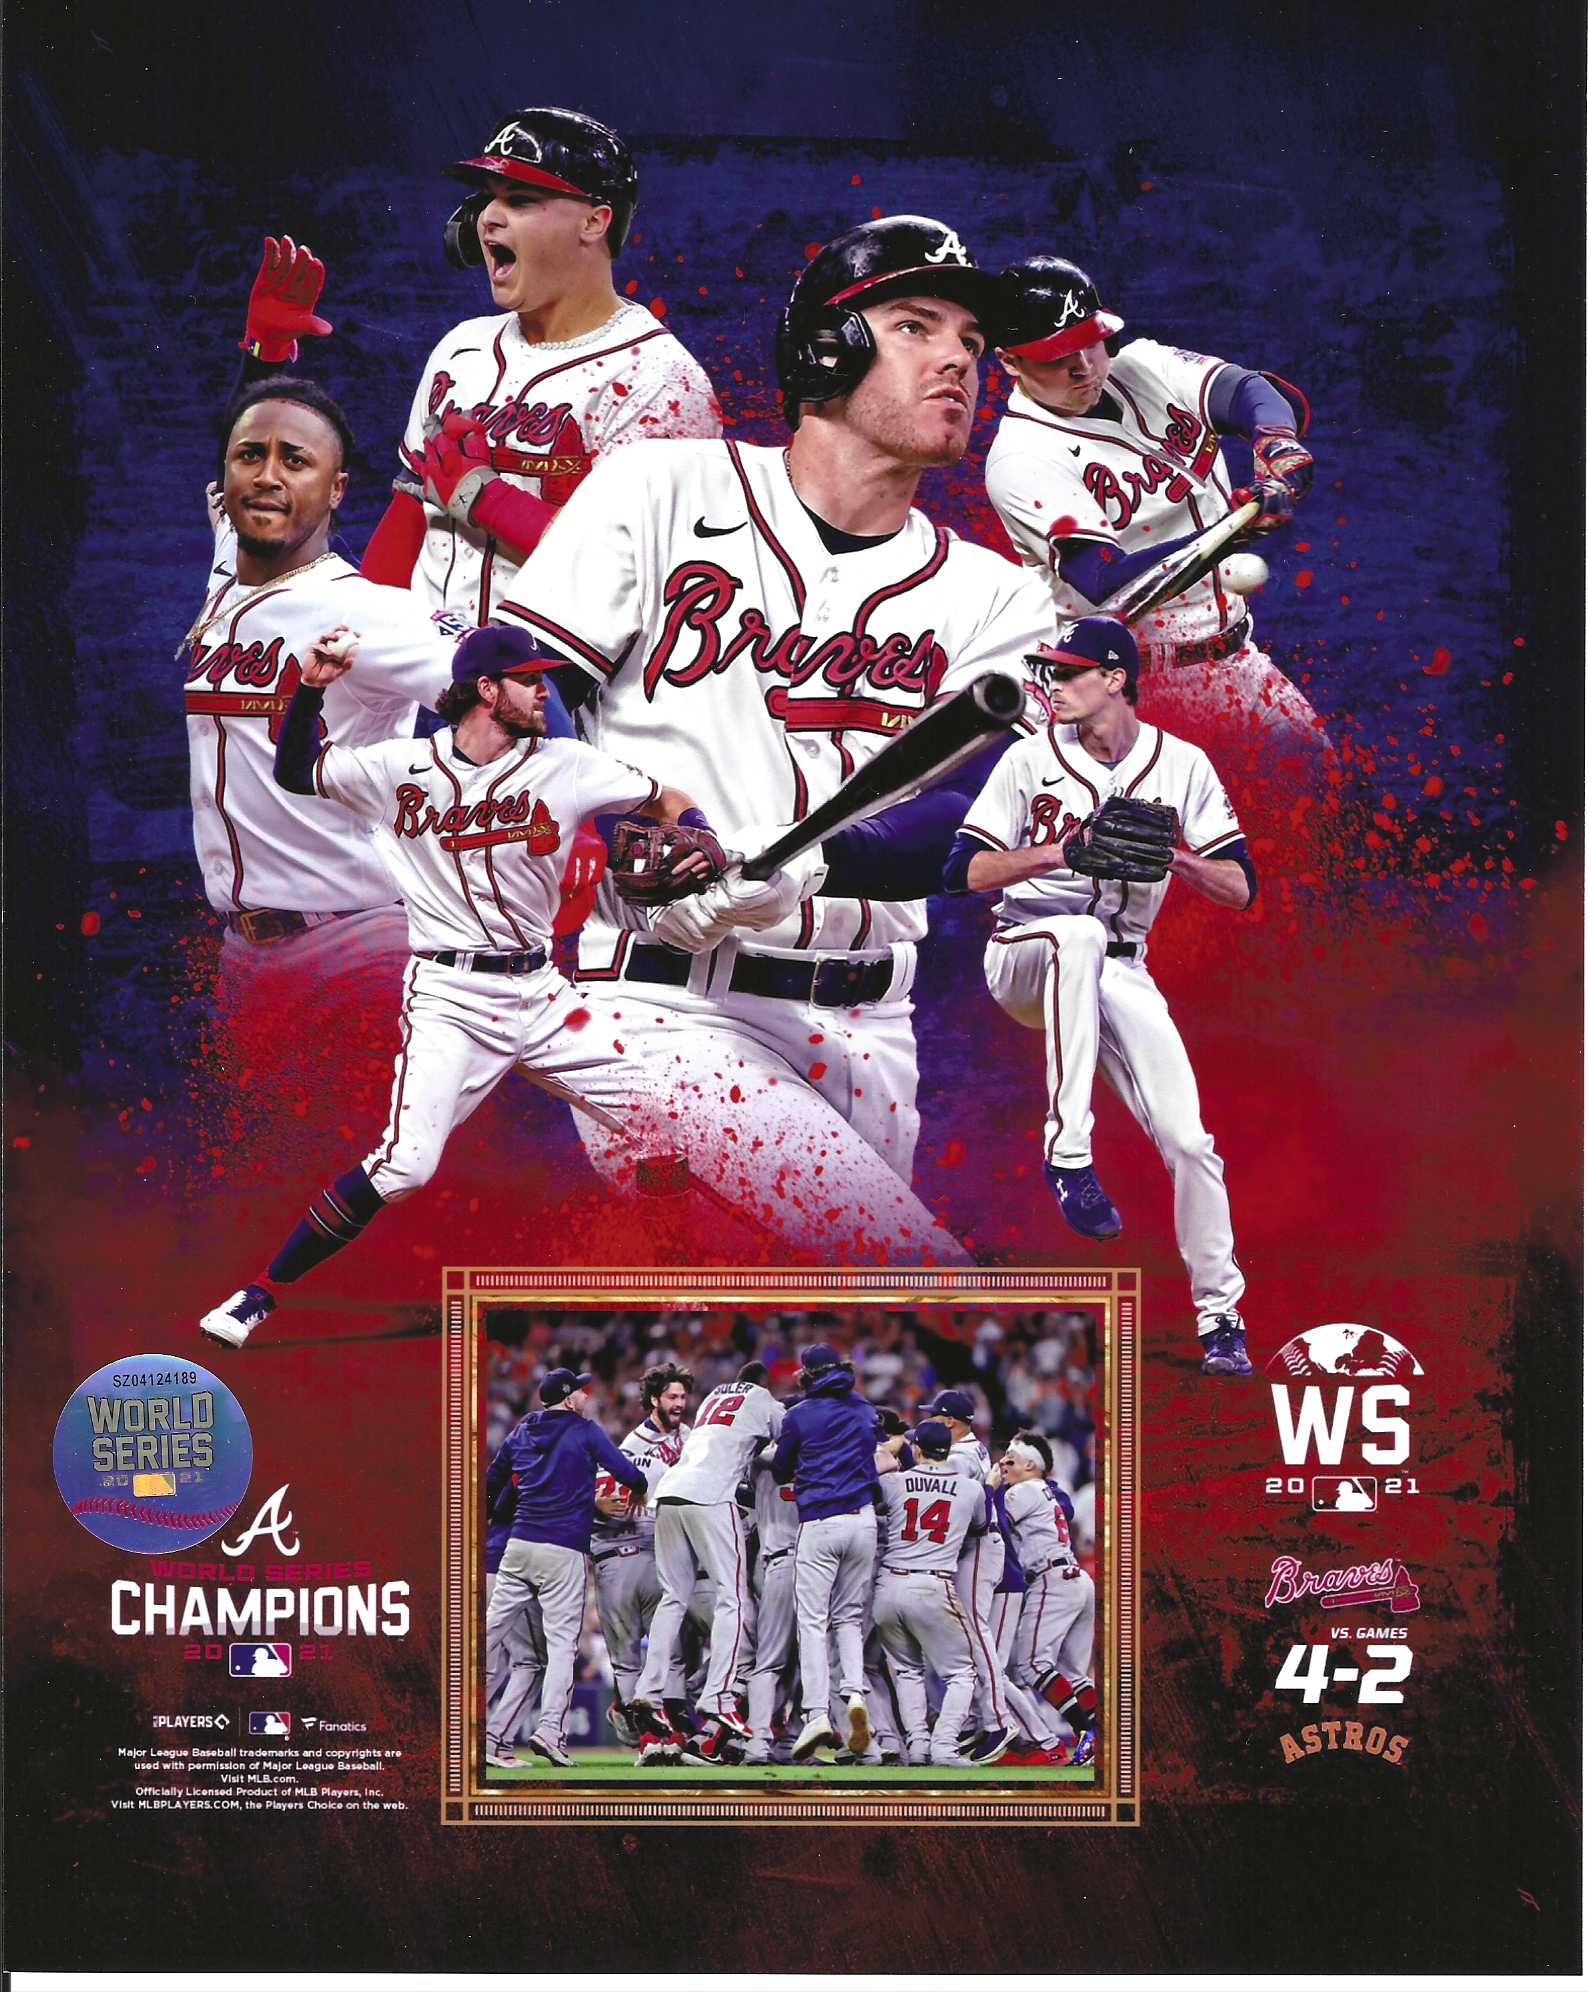 The Atlanta Braves World Series Championship Collage 8x10 Photo Picture